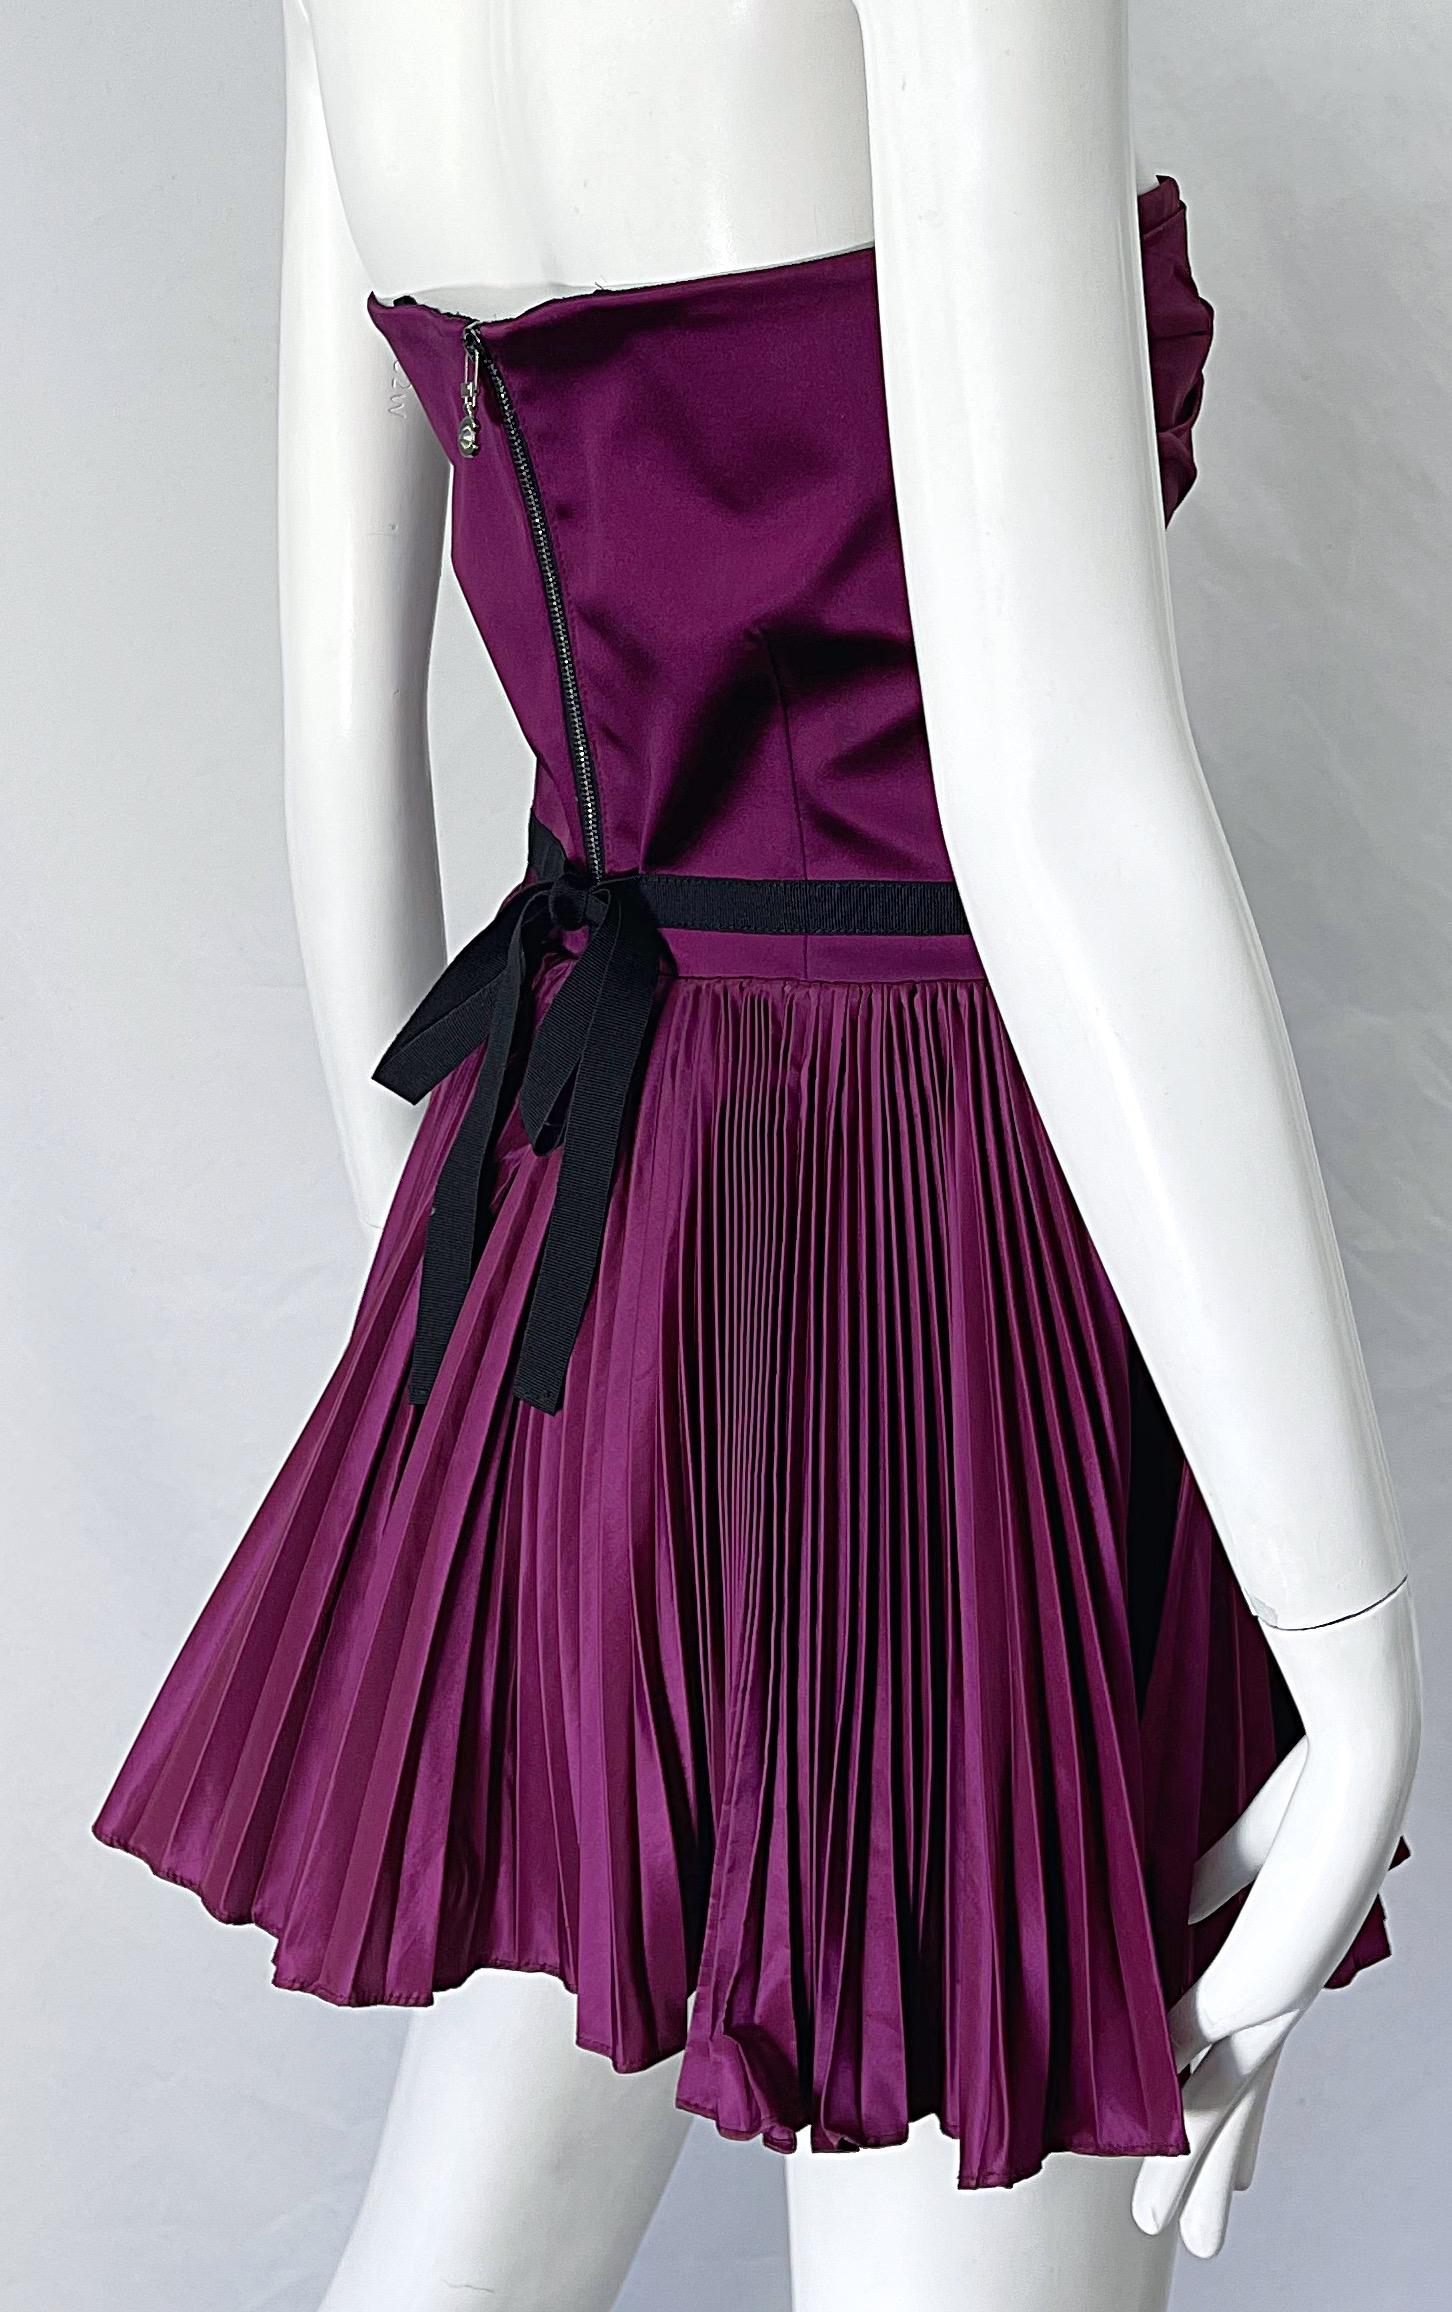 Yves Saint Laurent S/S 2012 Stefano Pilati Purple Silk Taffeta Mini Dress or Top For Sale 2